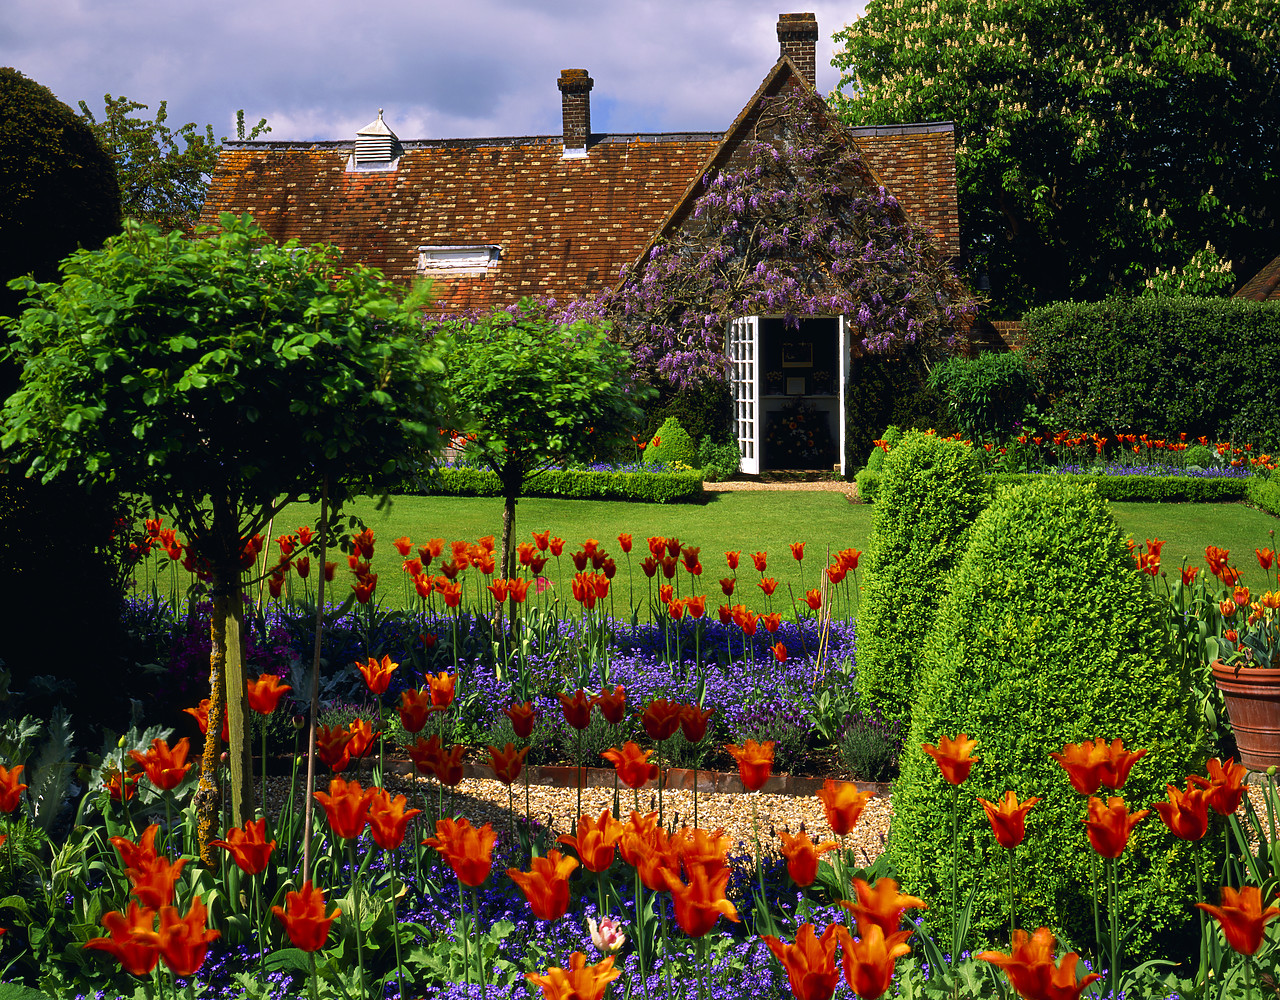 #050208-1 - Chenies Manor Garden in Spring, Chenies, Buckinghamshire, England